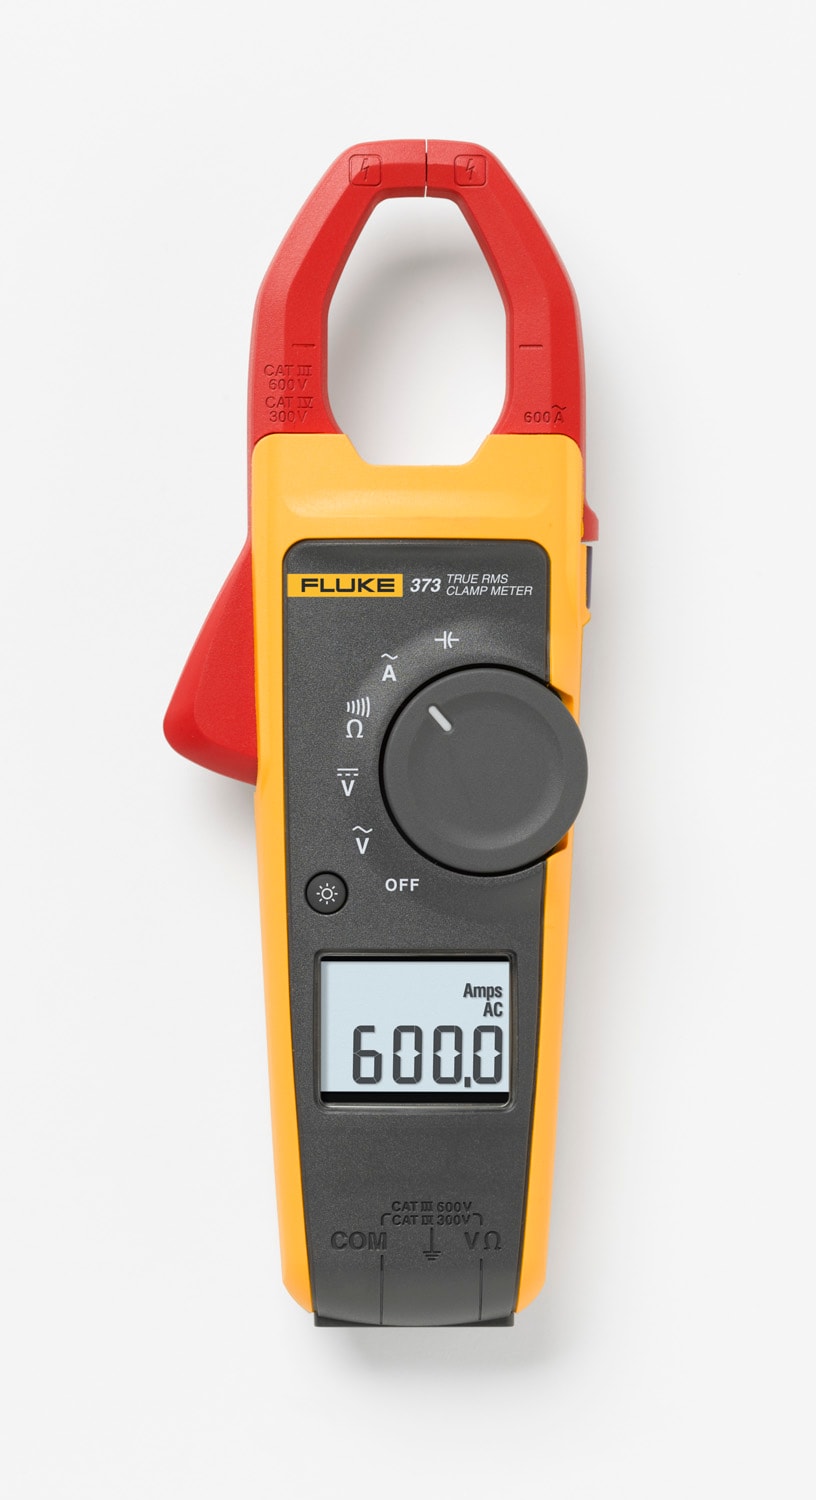 Multímetro digital Amprobe-Fluke AM-500-EUR de 600V CA/CC referencia 4102332